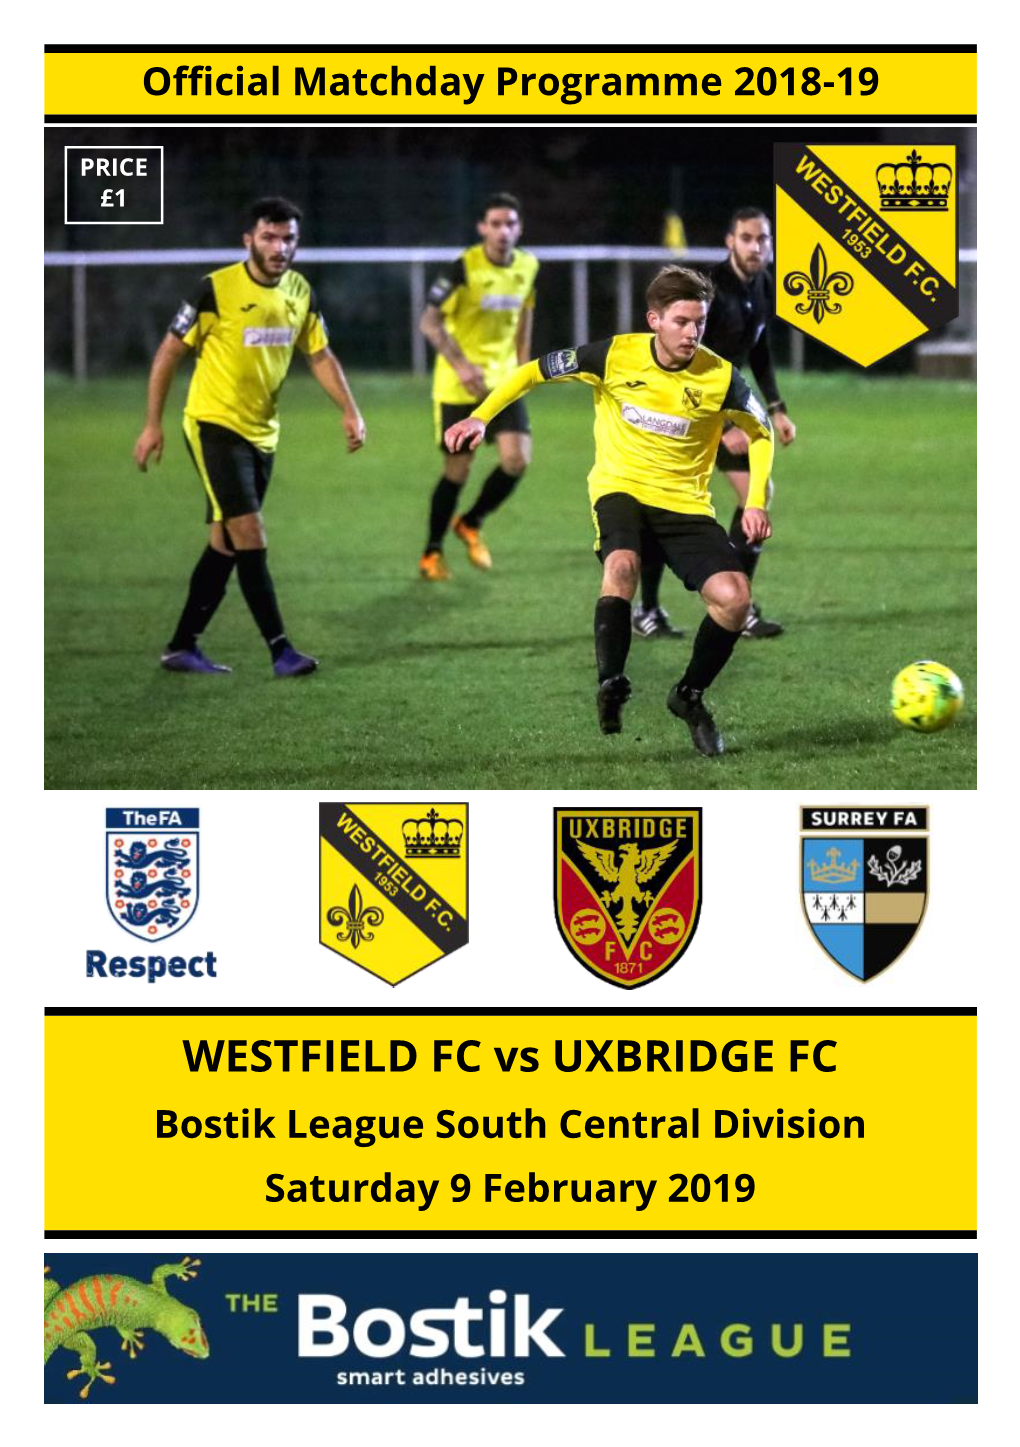 WESTFIELD FC Vs UXBRIDGE FC Bostik League South Central Division Saturday 9 February 2019